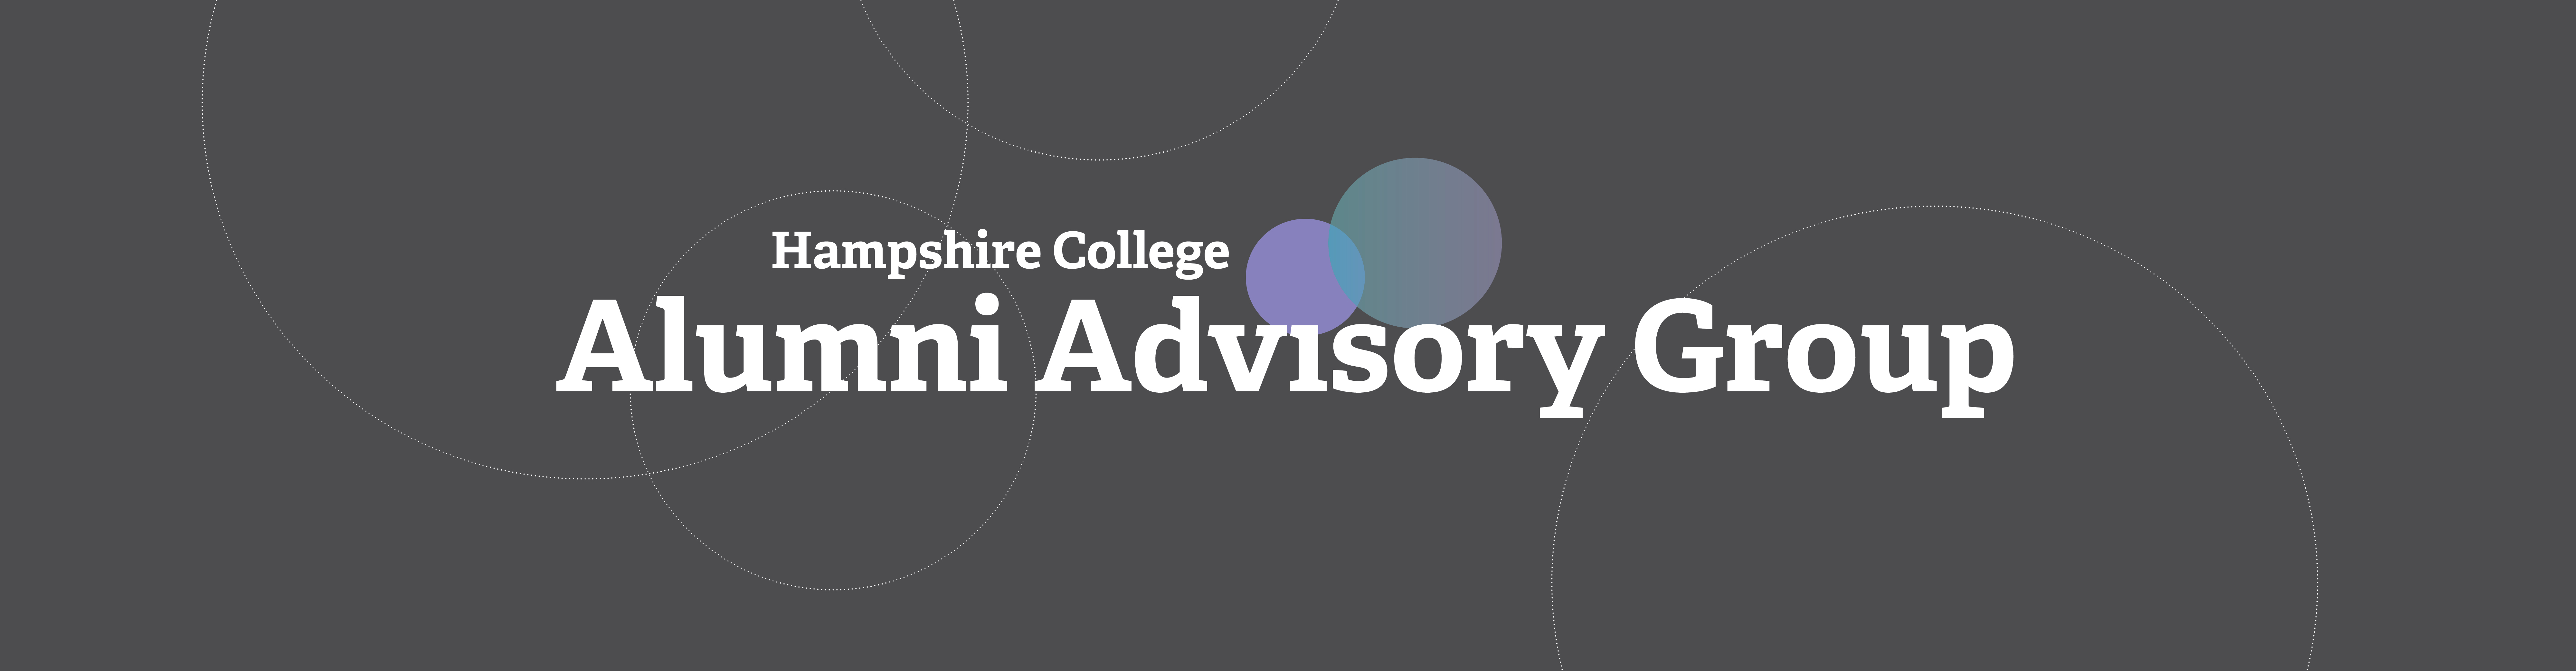 Graphic banner reading "Alumni Advisory Group"